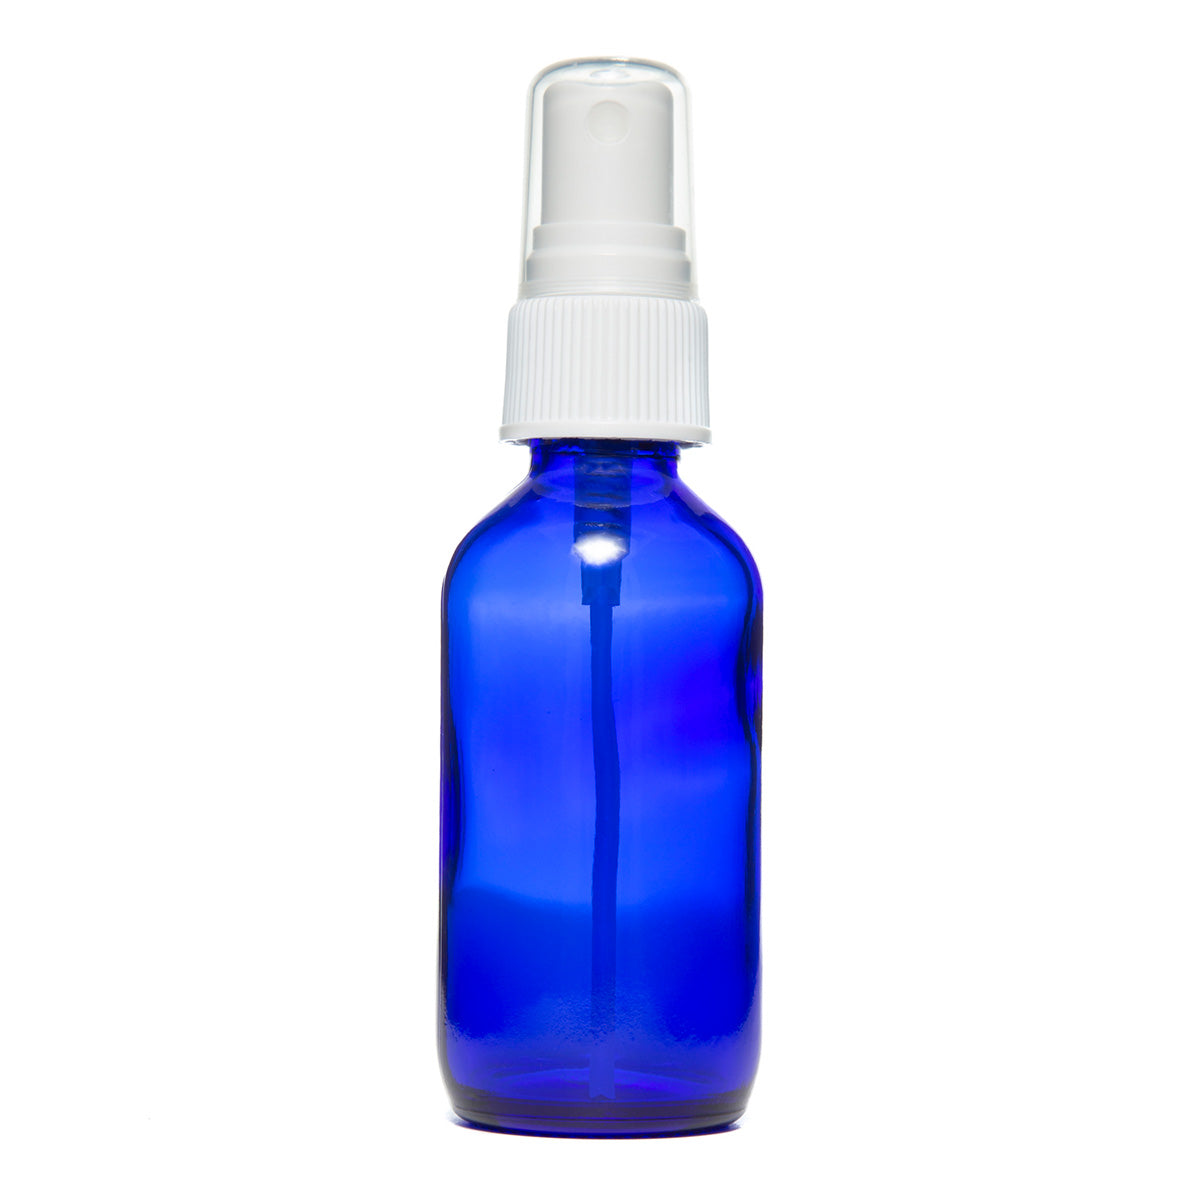 Blue Bottle Spray Top 2 oz